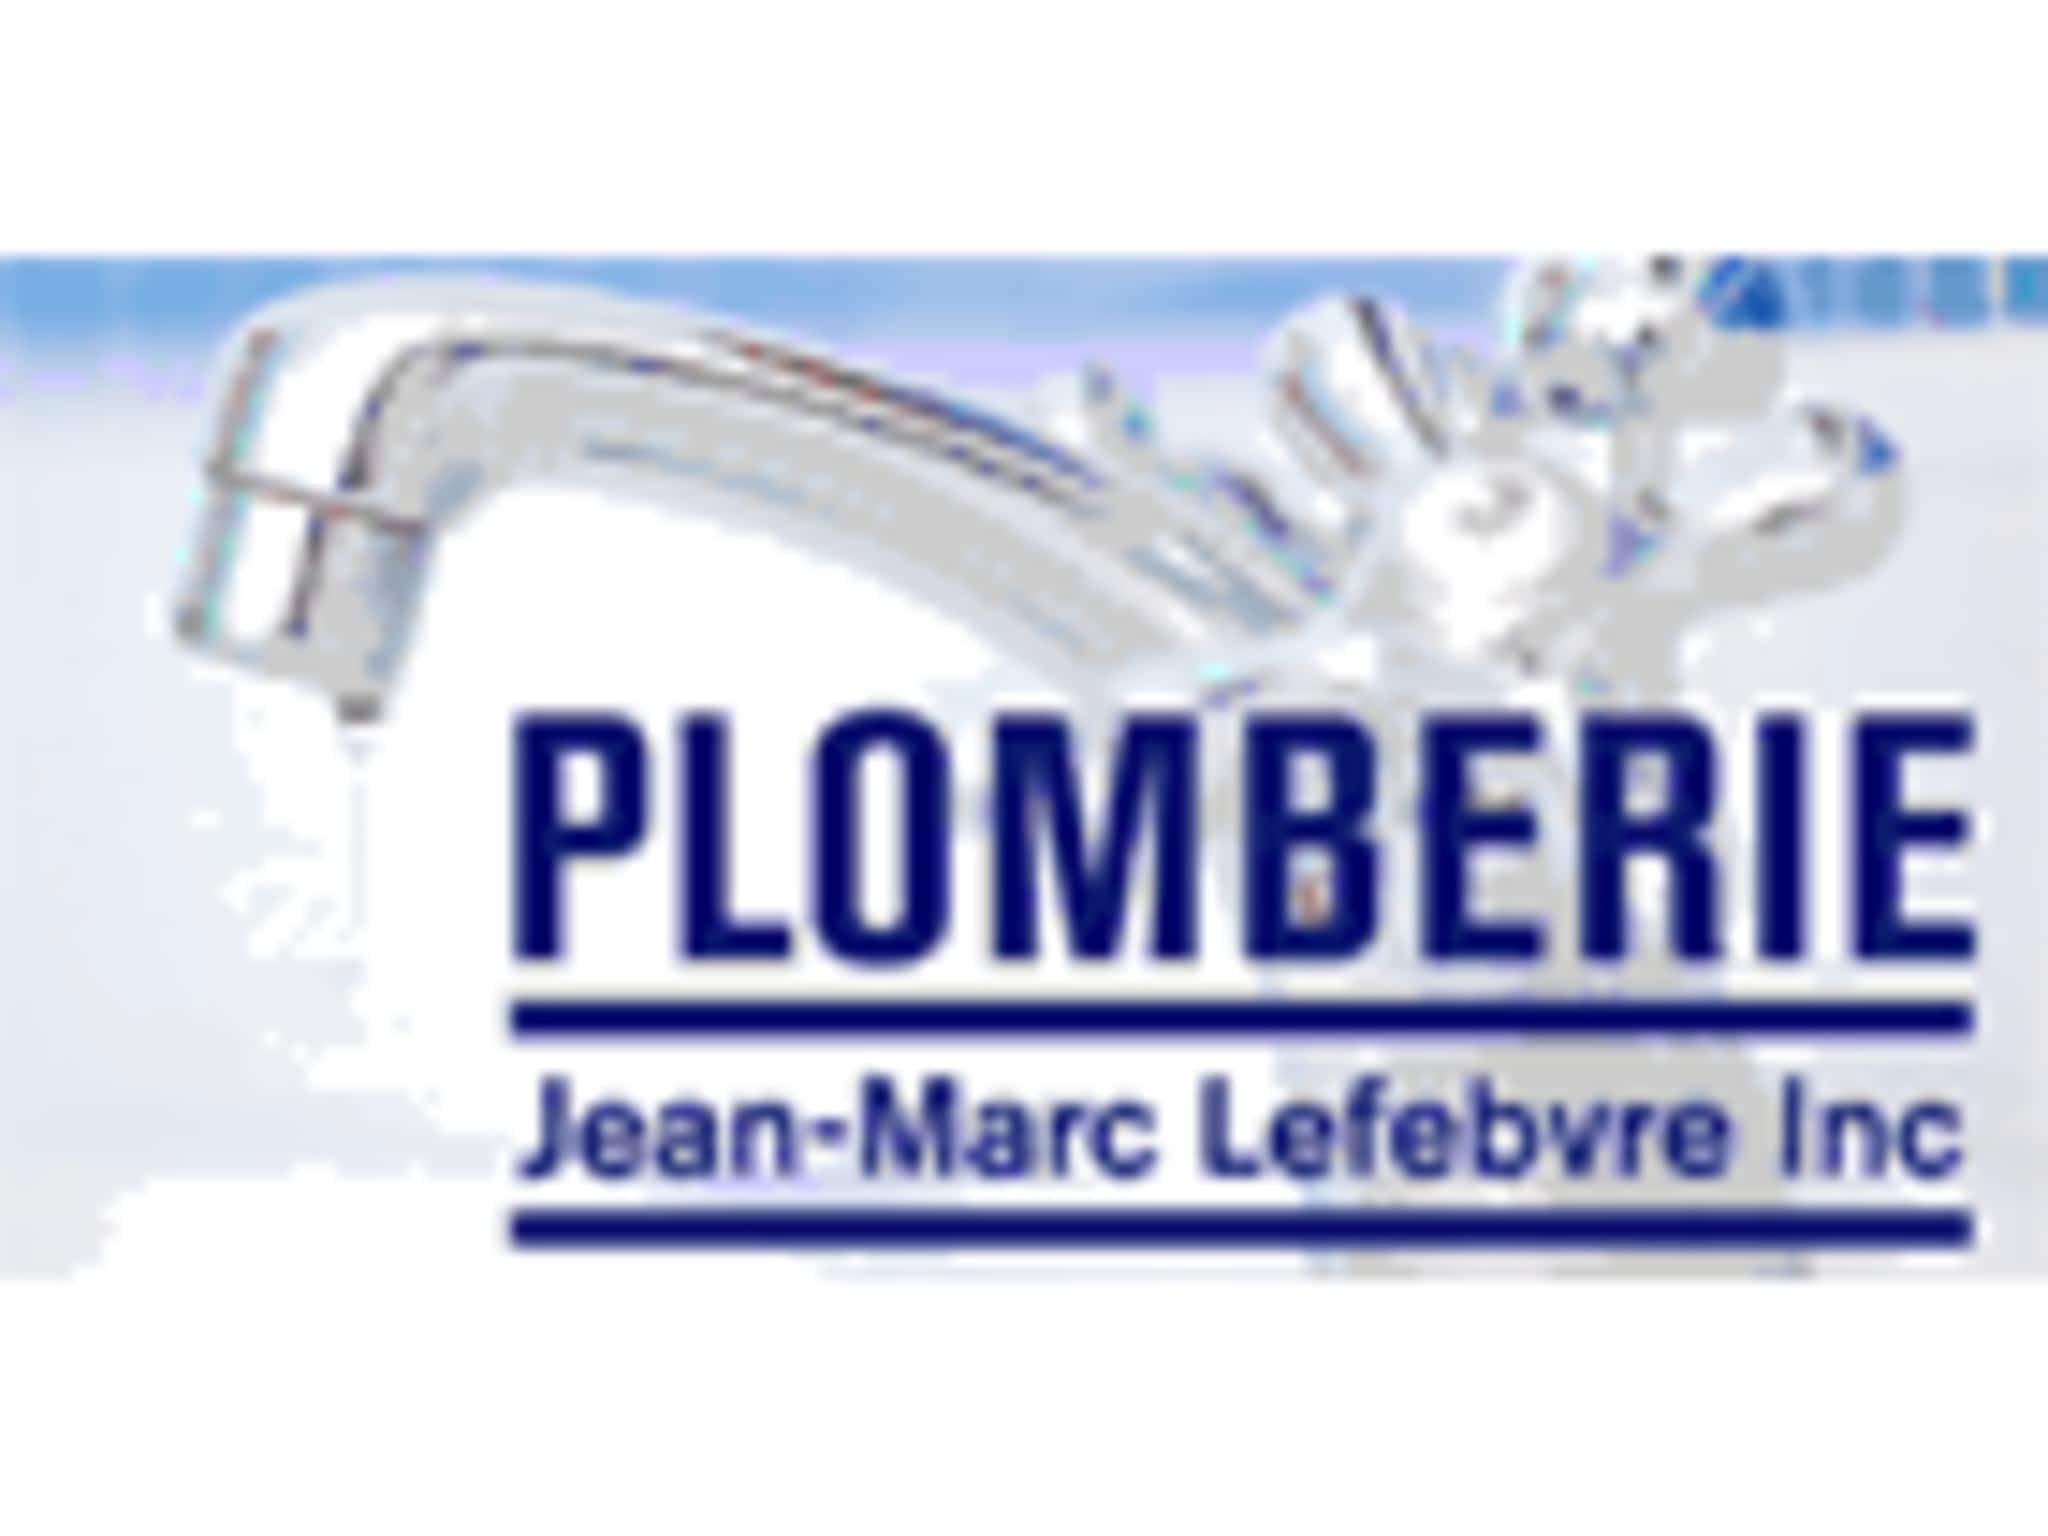 photo Plomberie Chauffage Jean-Marc Lefebvre Inc